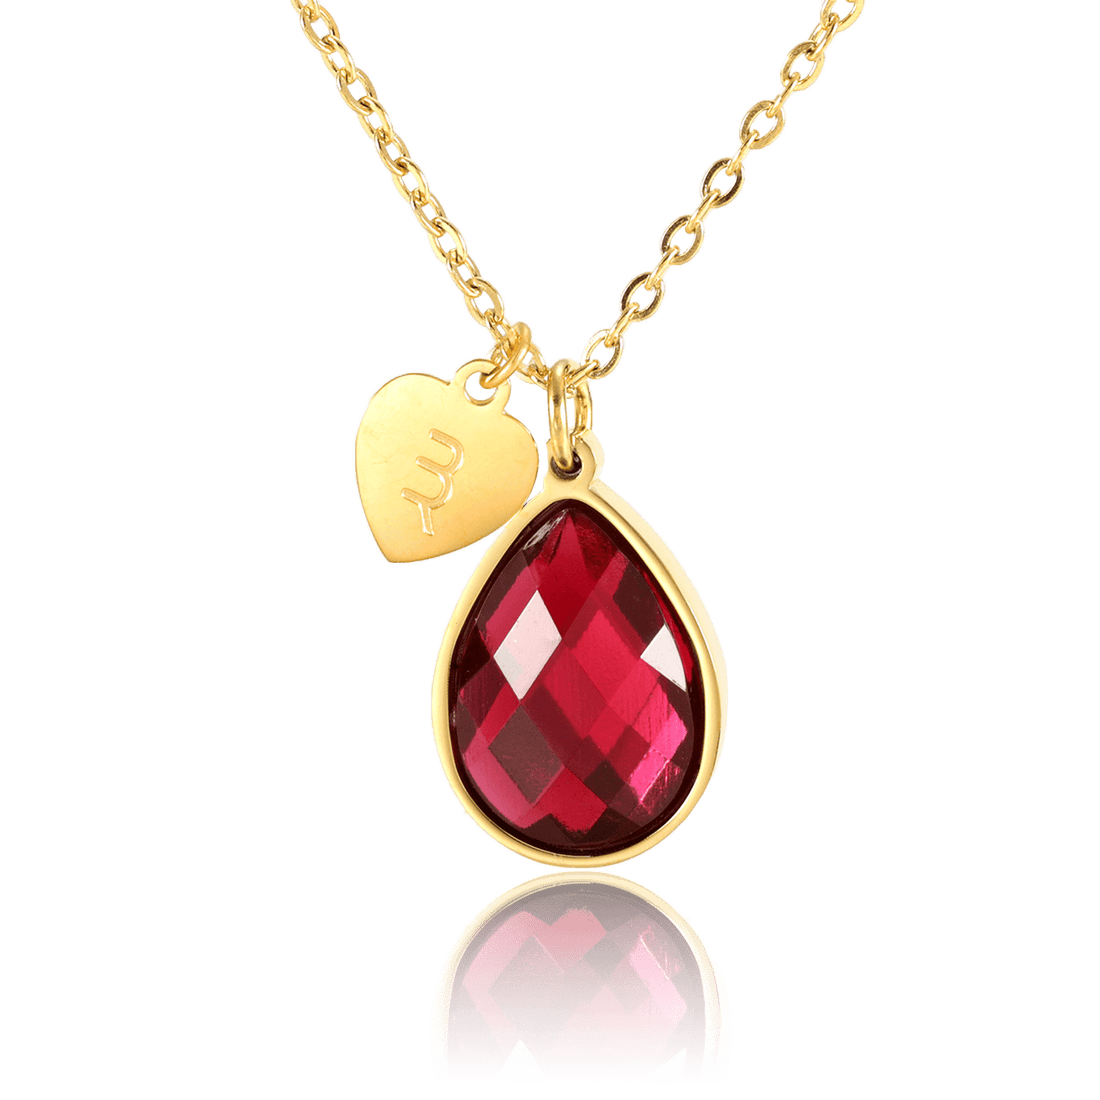 bianco rosso Necklaces Gold January Birthstone - Garnet cyprus greece jewelry gift free shipping europe worldwide